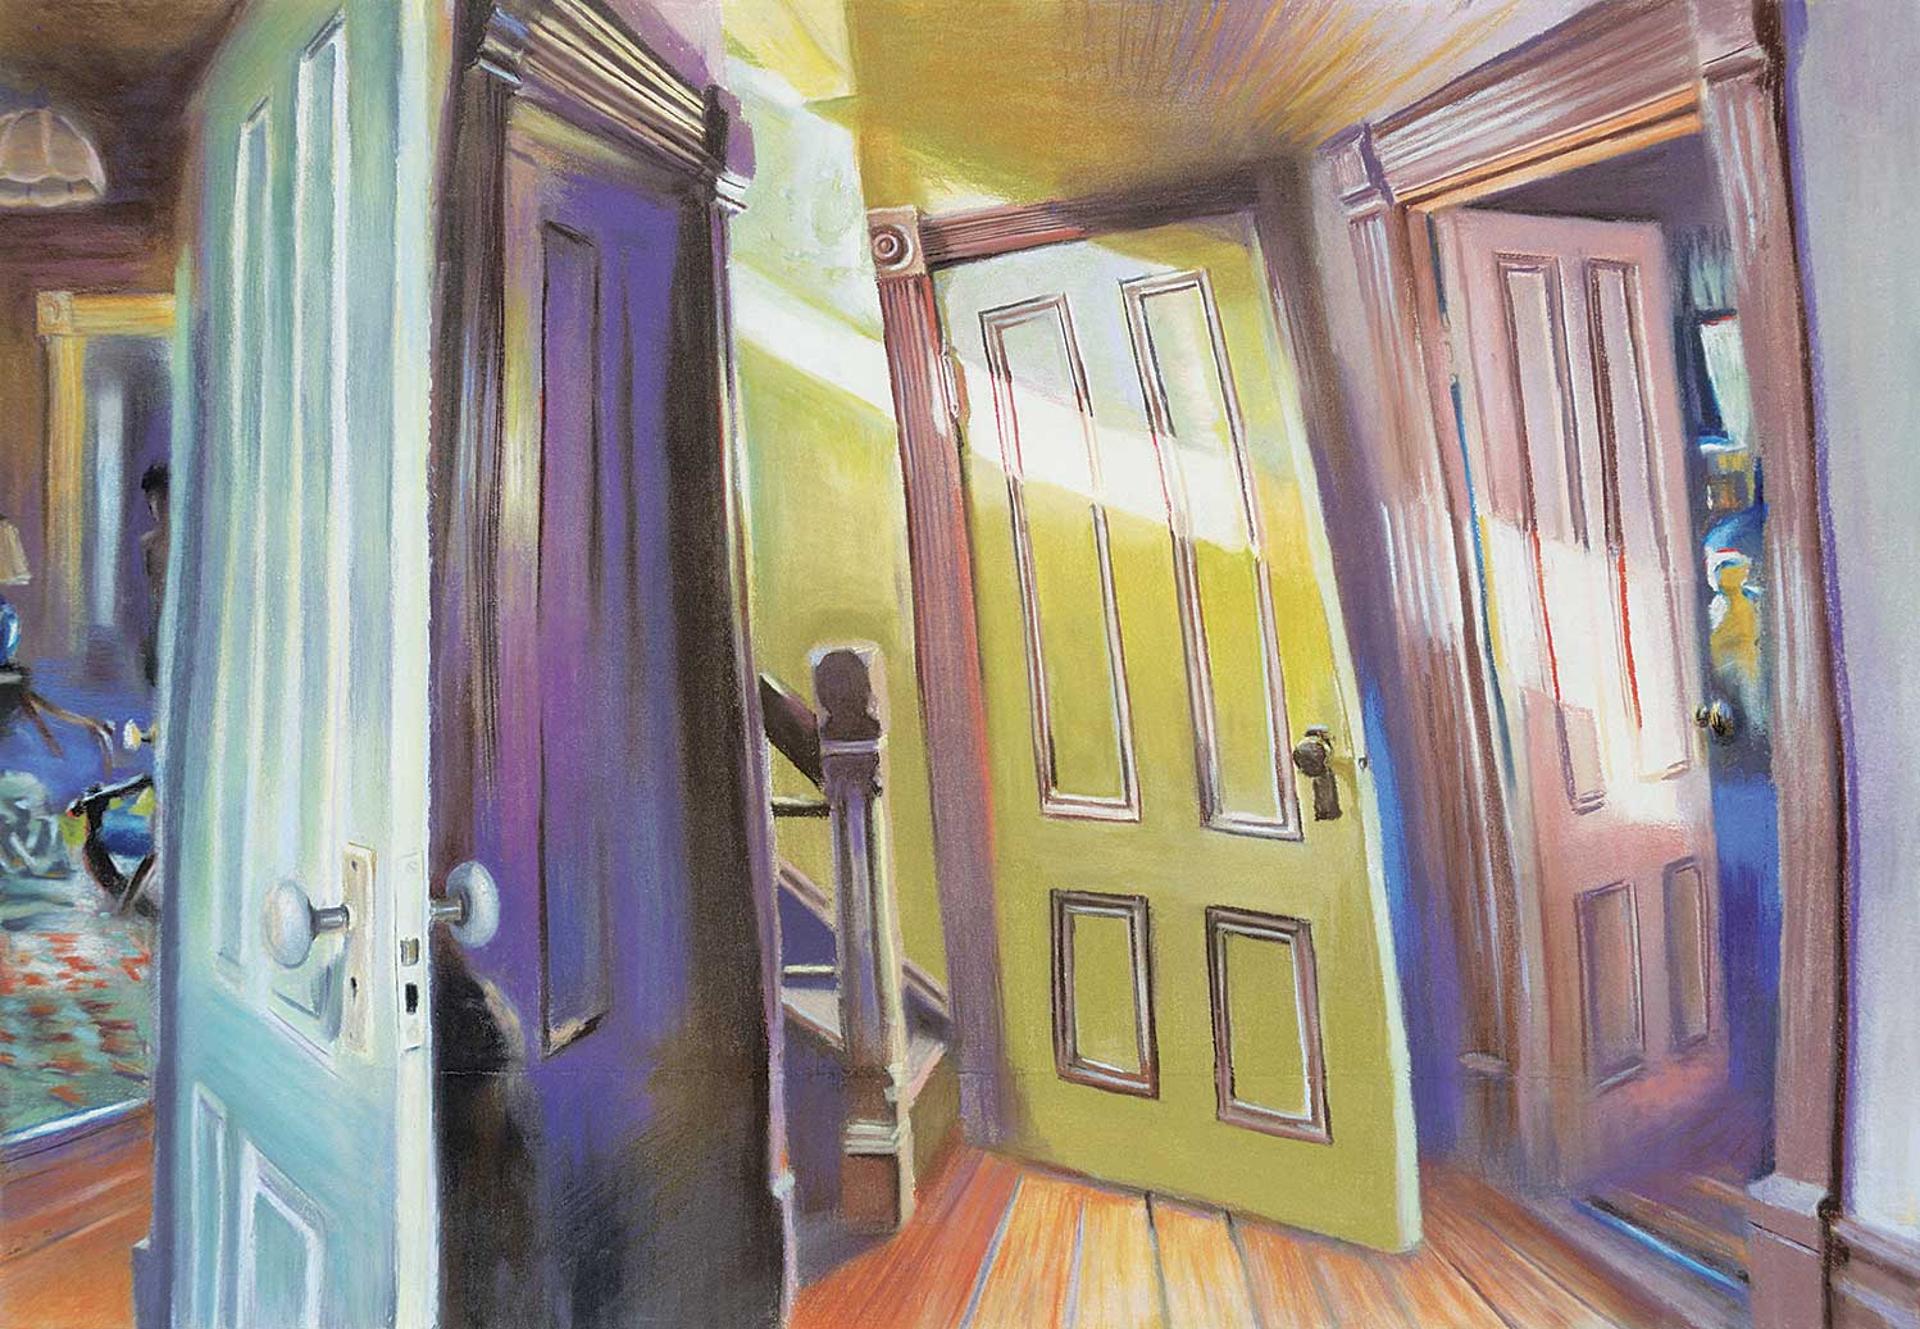 Brad Pasutti (1957) - Untitled - Many Doors